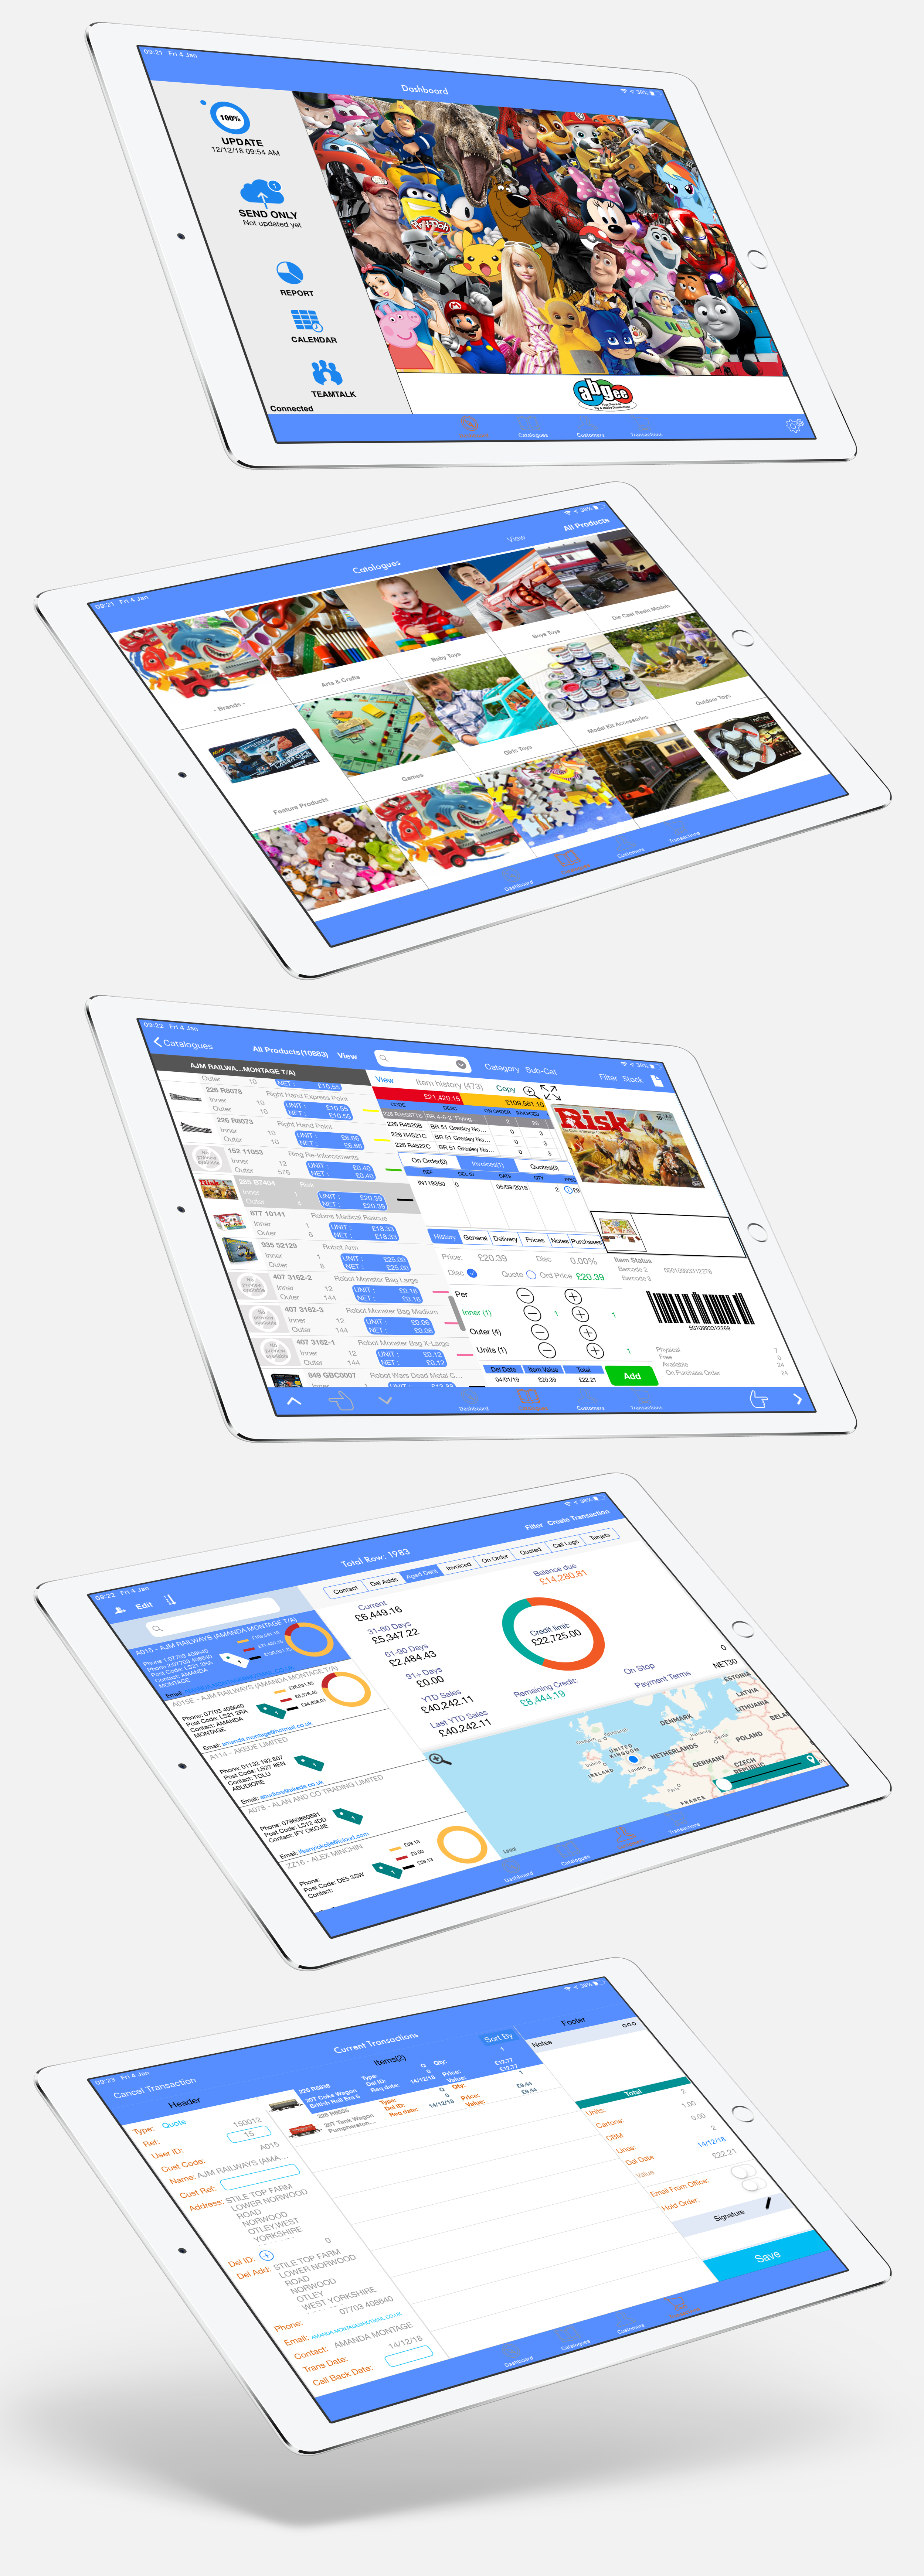 Sales Rep iPad App